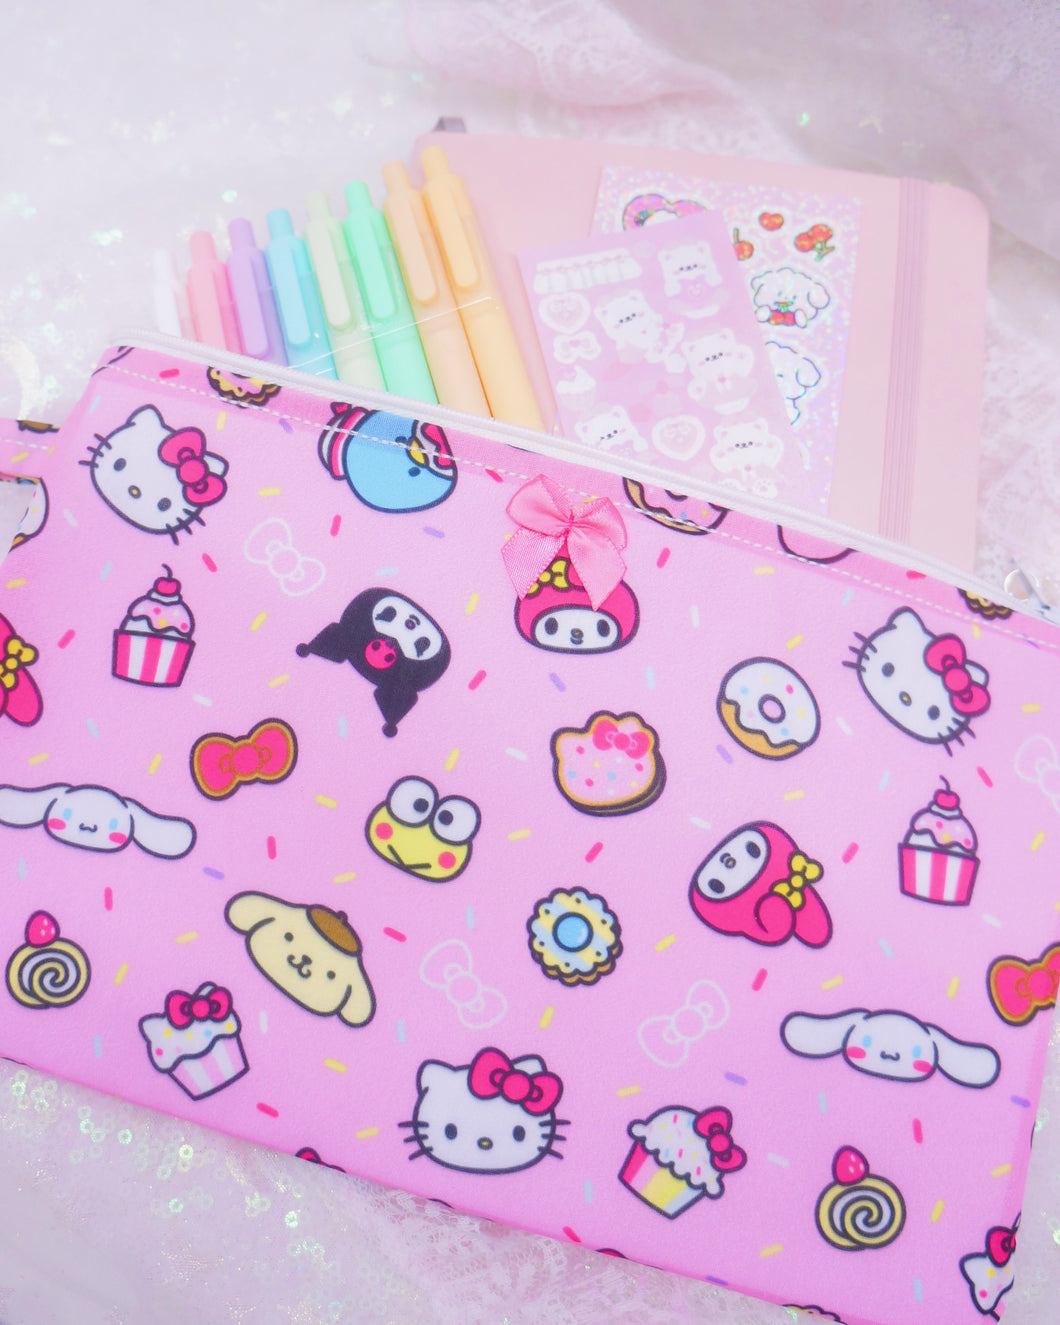 Kawaii Pink Sweet Characters Flat Pouch Bag